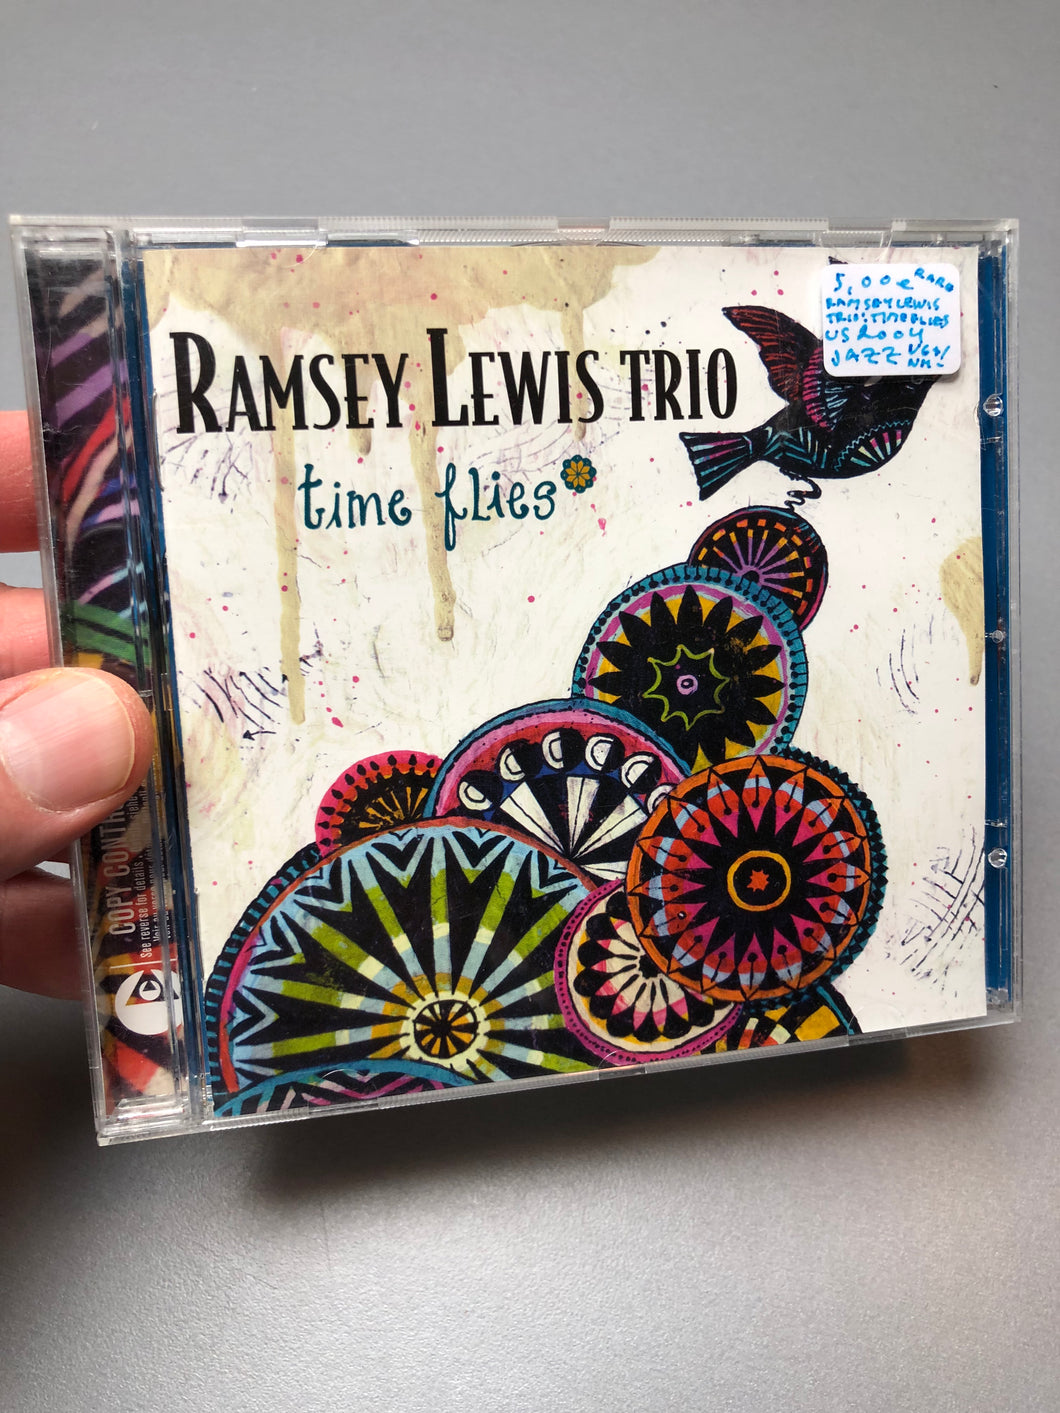 Ramsey Lewis Trio: Time Flies, US 2004